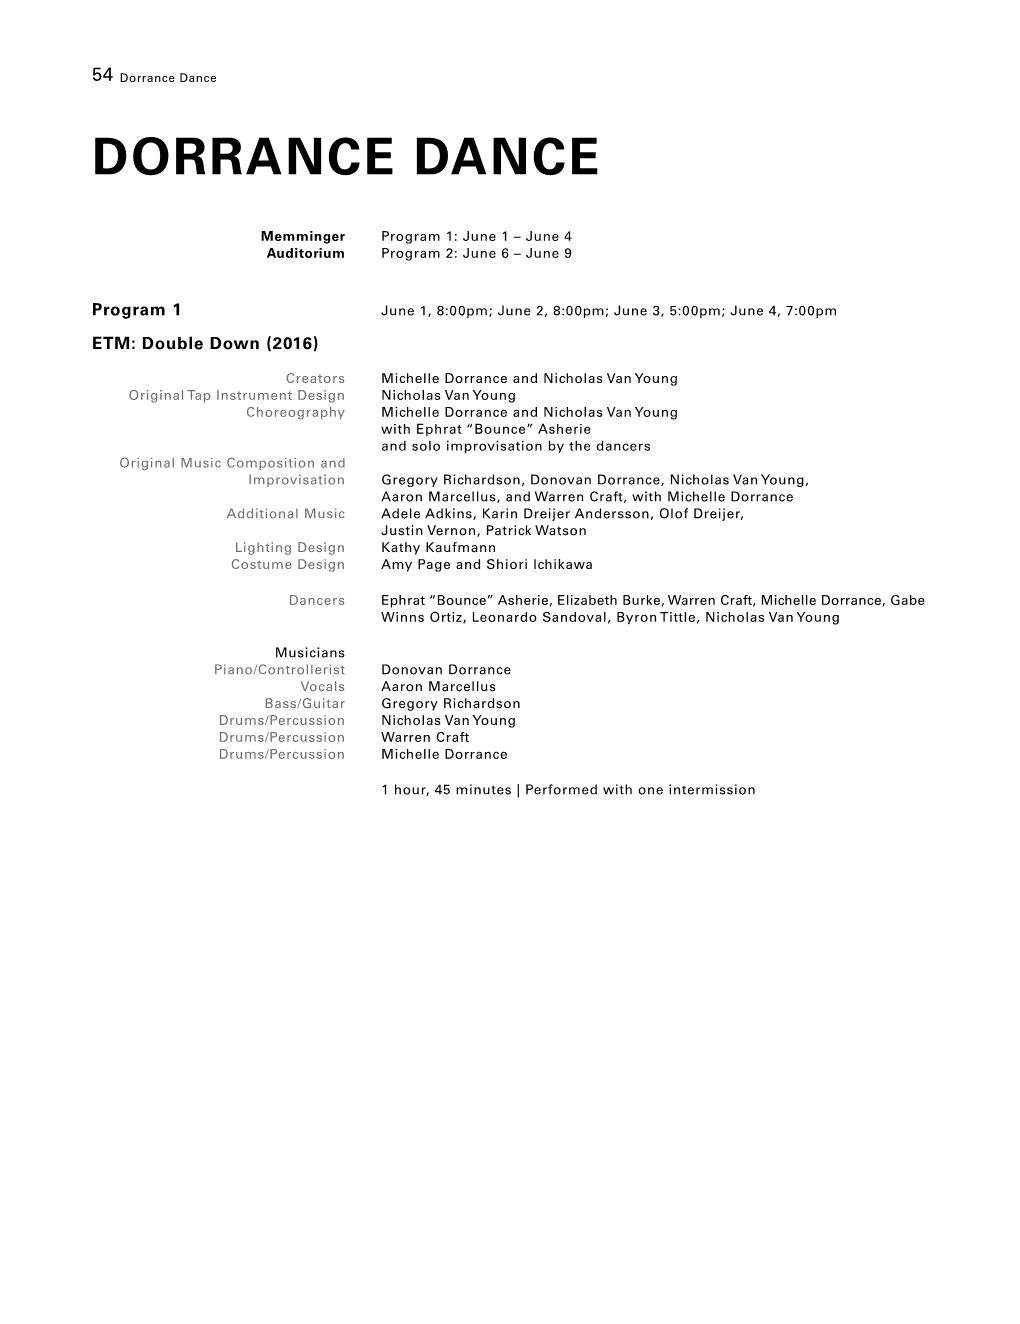 Dorrance Dance